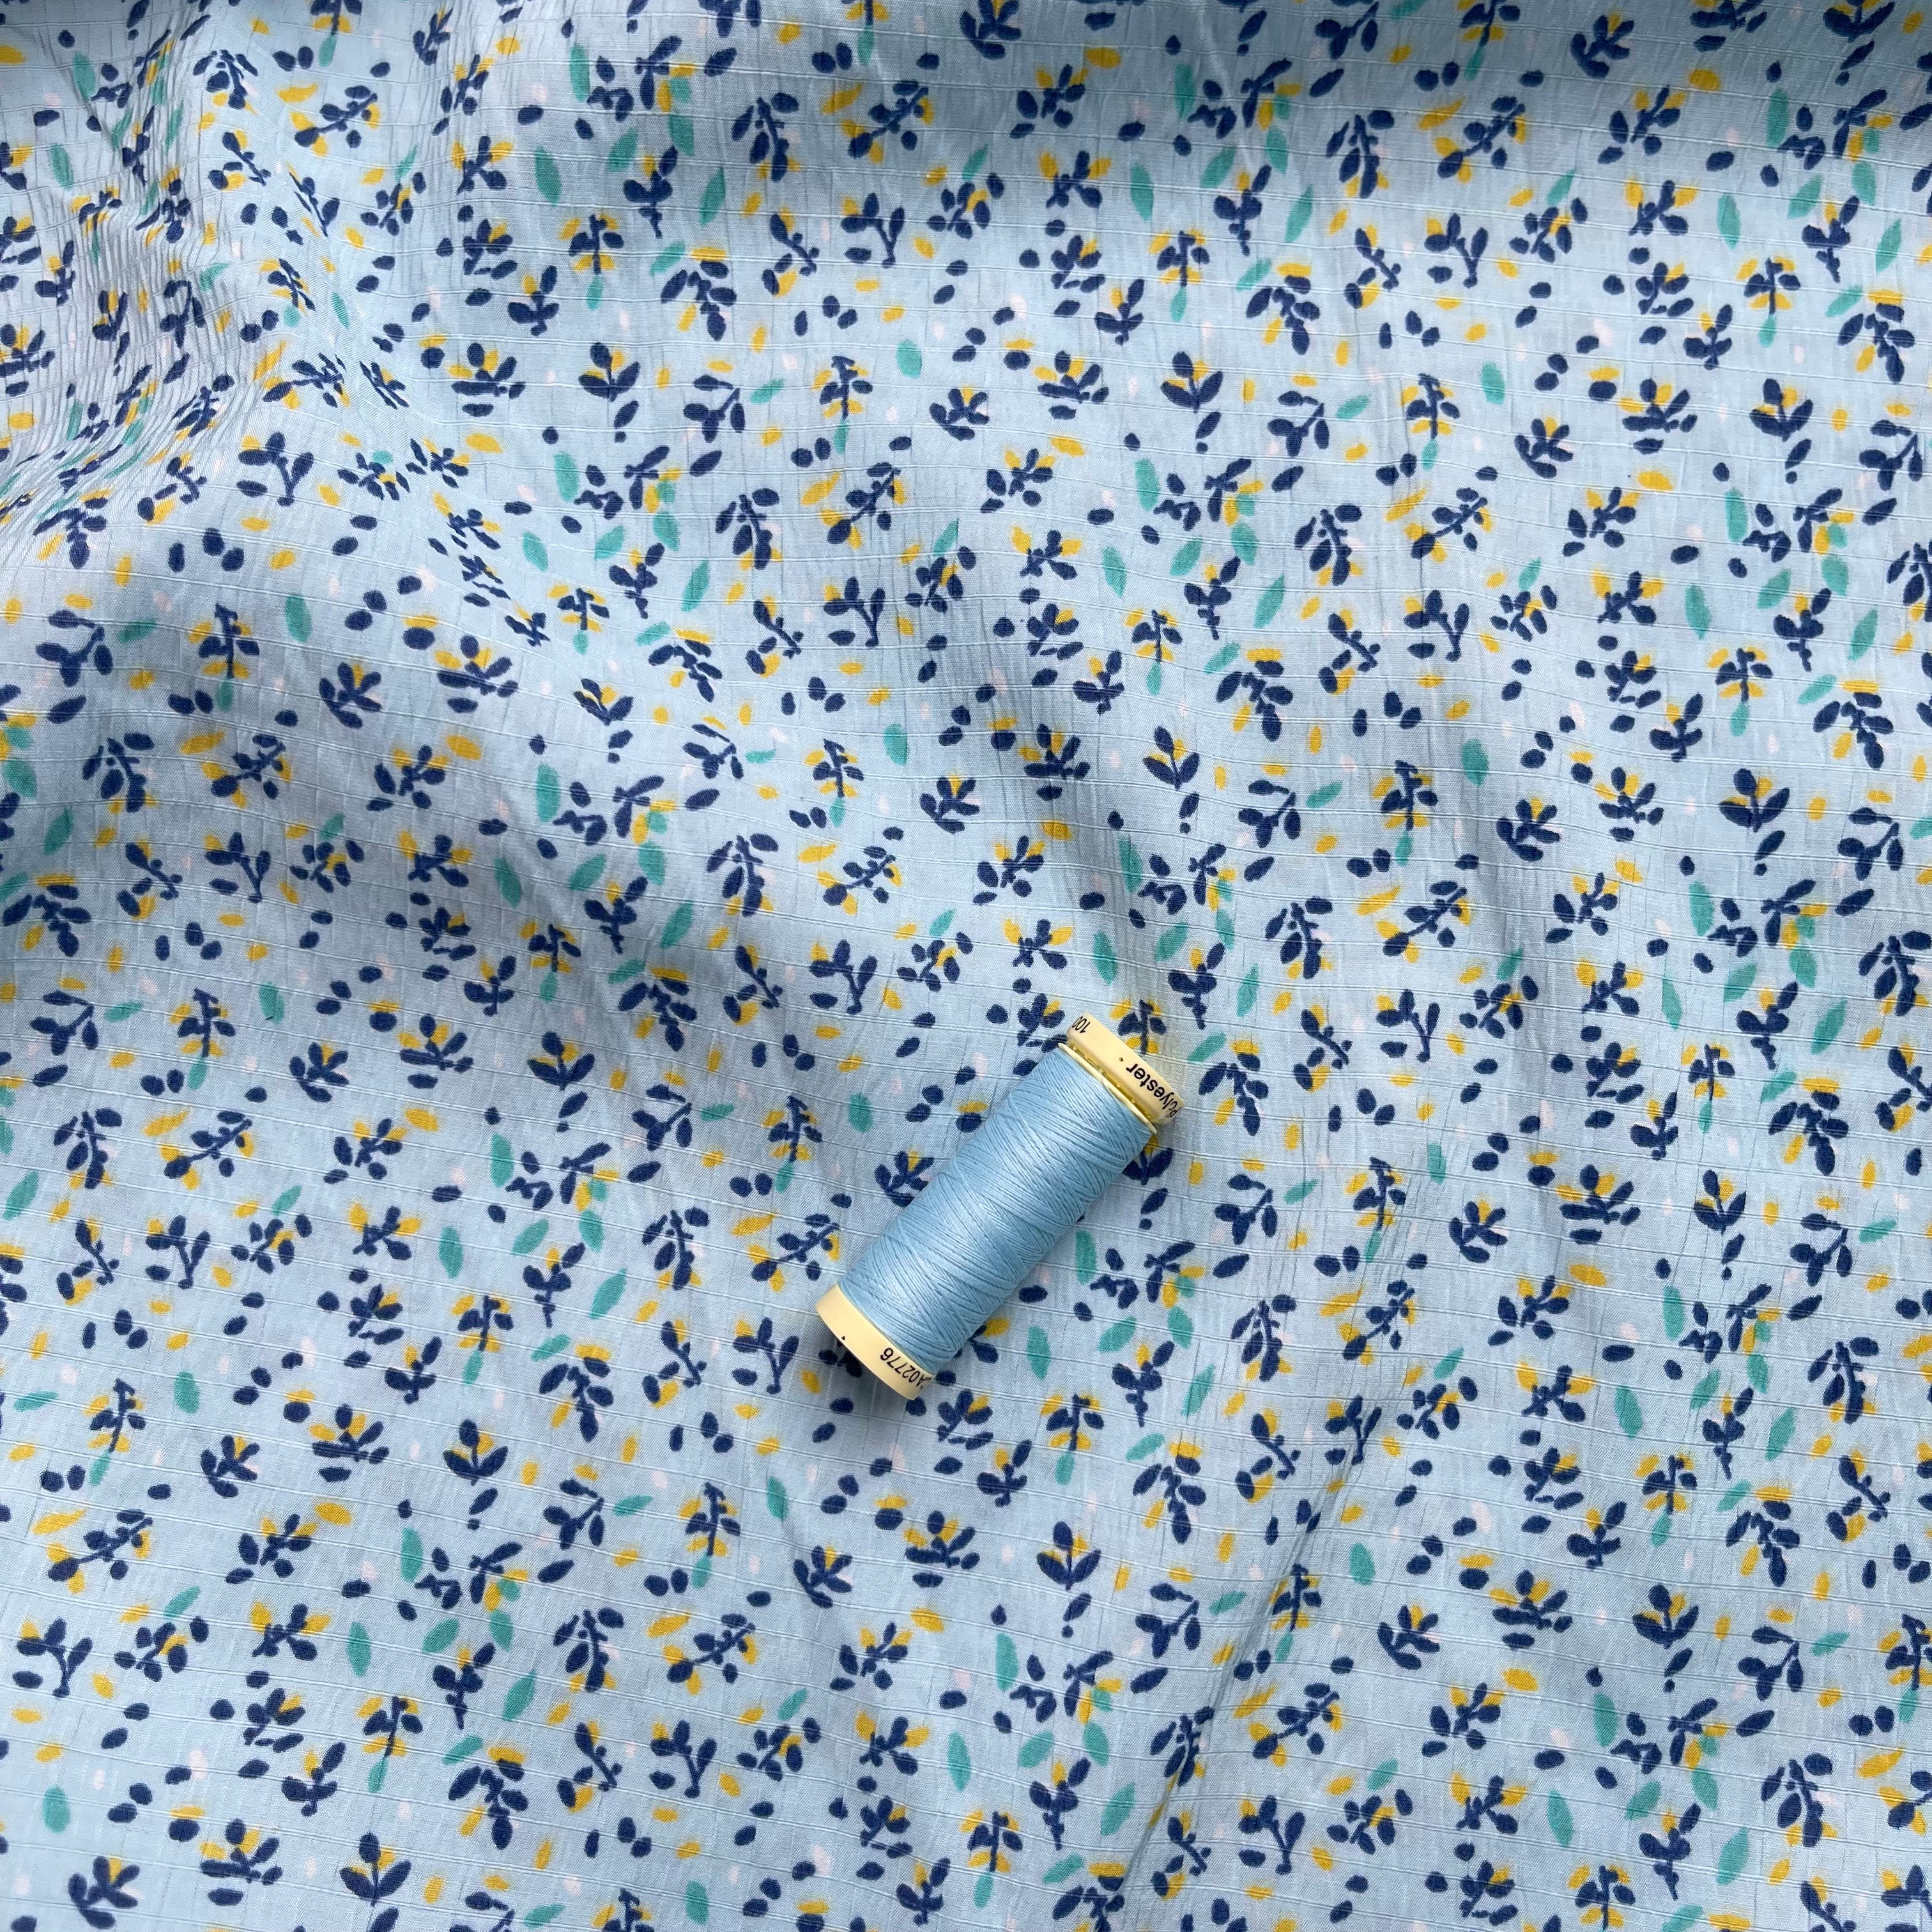 REMNANT 0.18 Metre - Ditsy Petals on Light Blue Viscose Seersucker Fabric